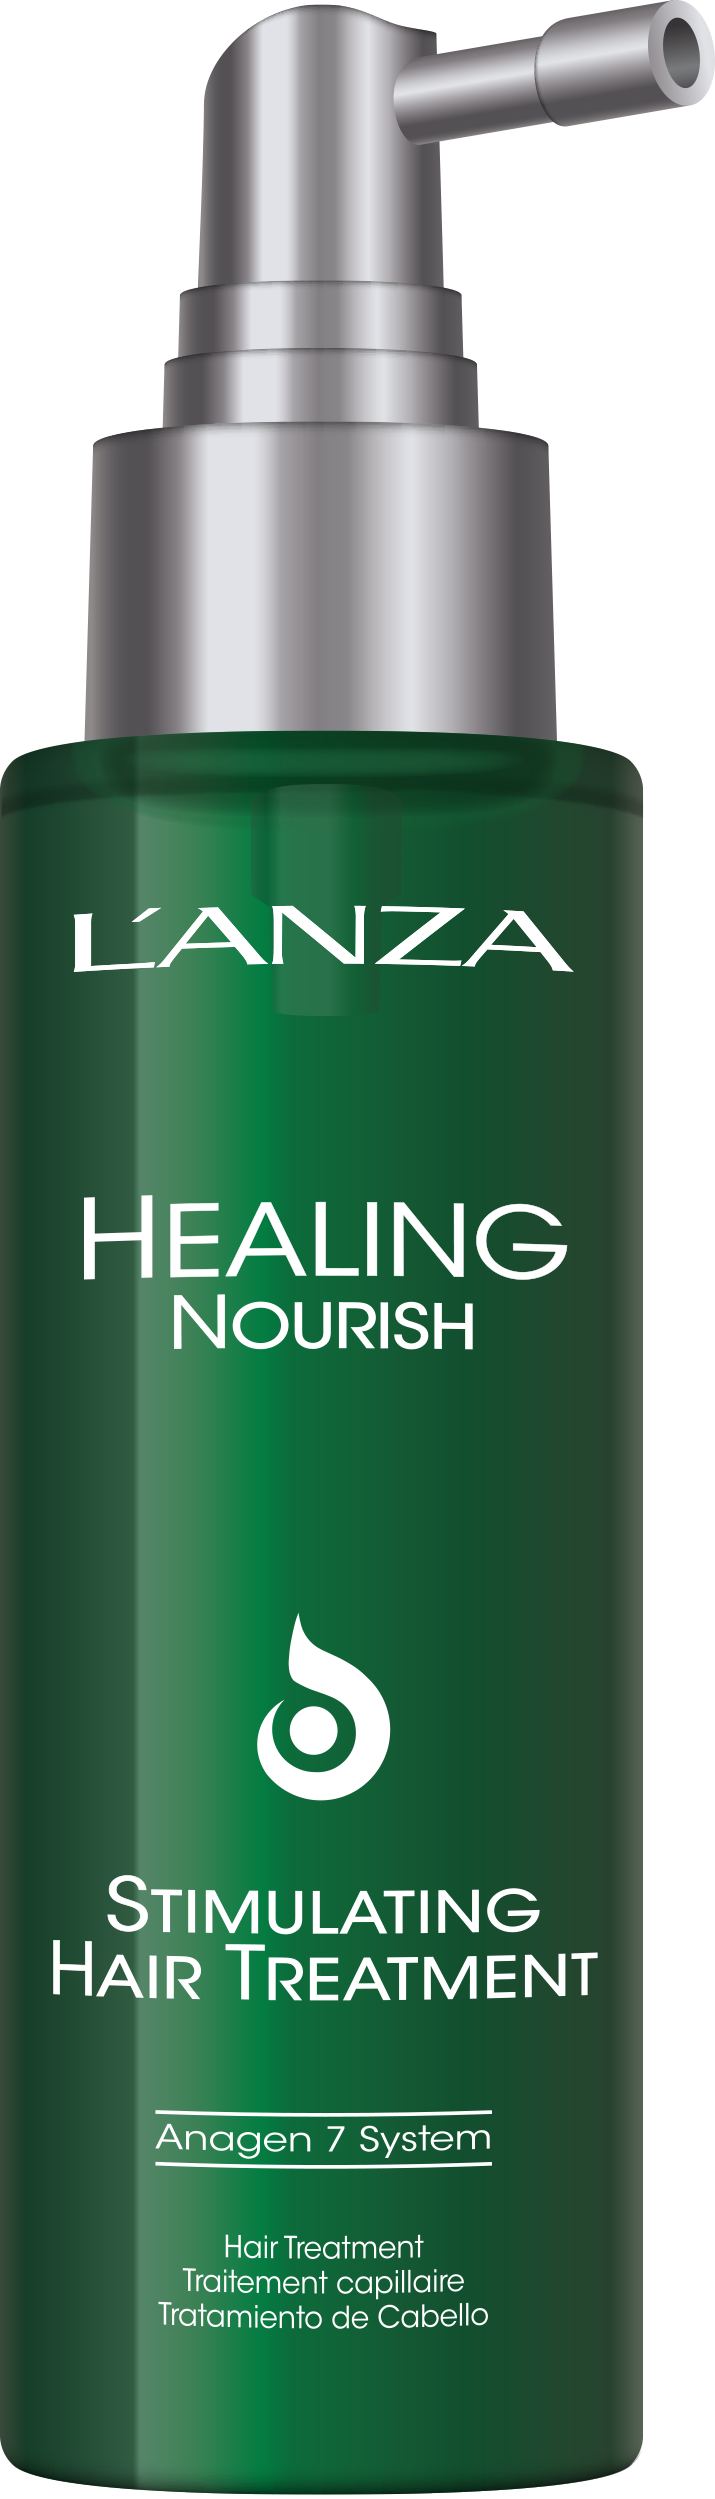 L'ANZA Healing Nourish Treatment